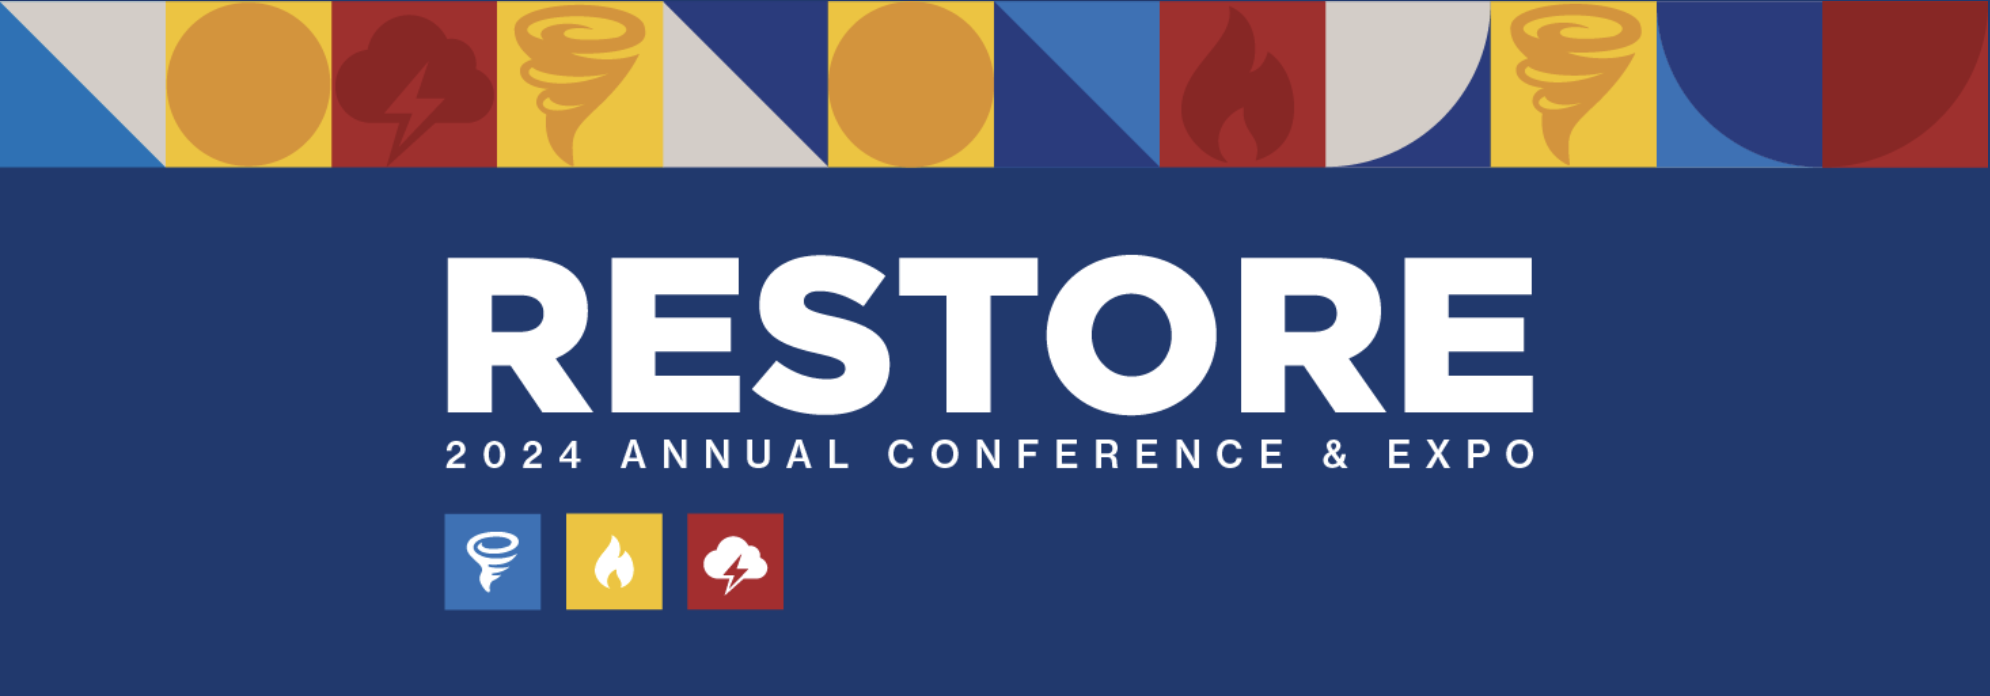 2024 RESTORE Conference & Expo